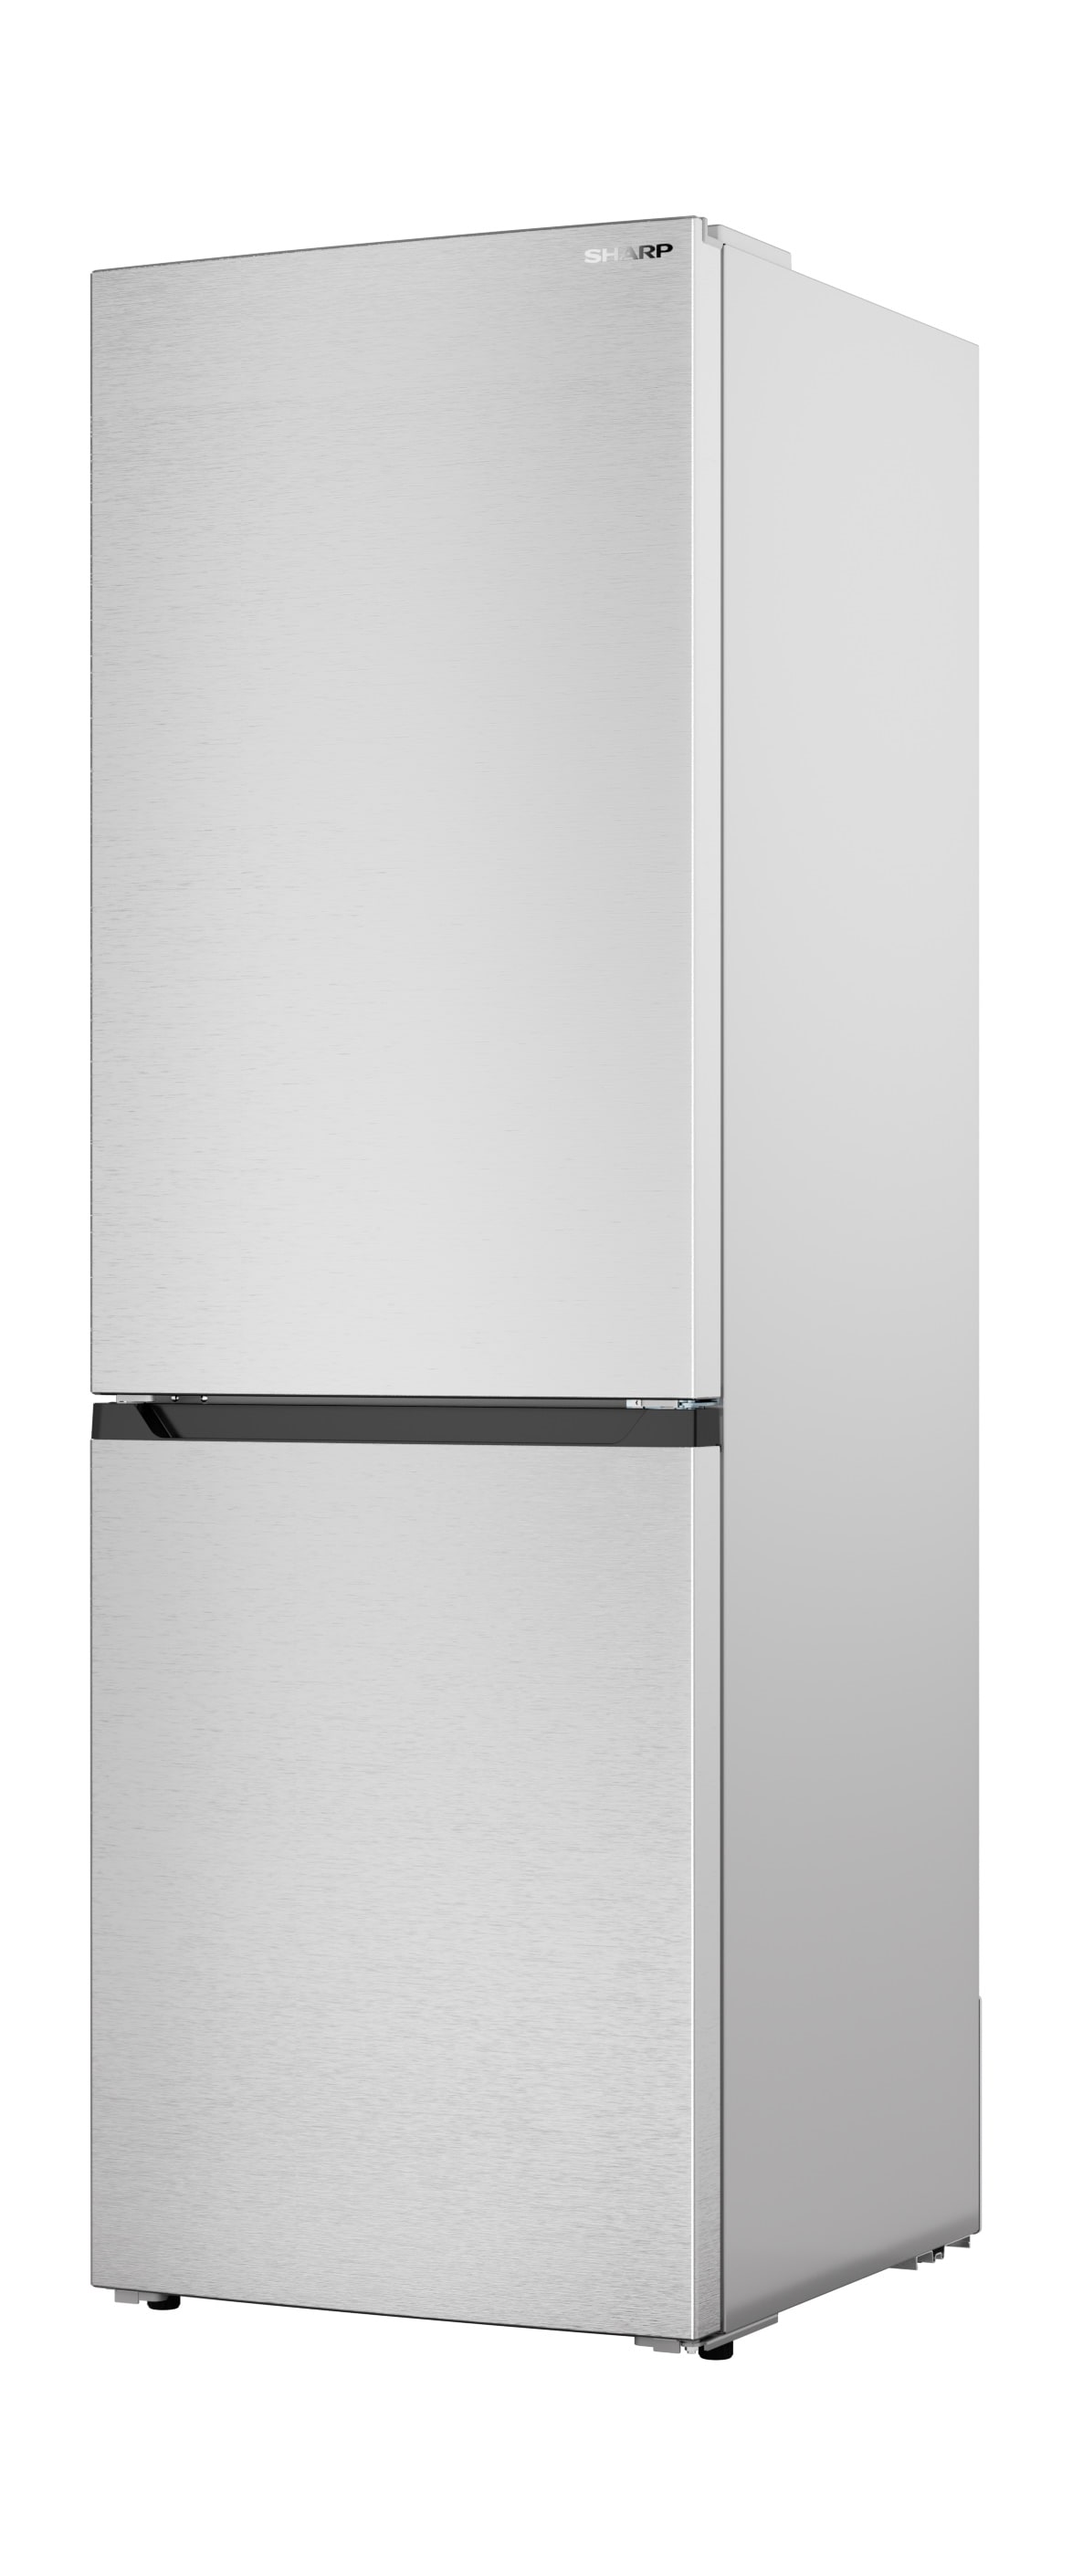 Sharp 11.5-cu ft Bottom-Freezer Refrigerator (Stainless Steel) ENERGY STAR  in the Bottom-Freezer Refrigerators department at